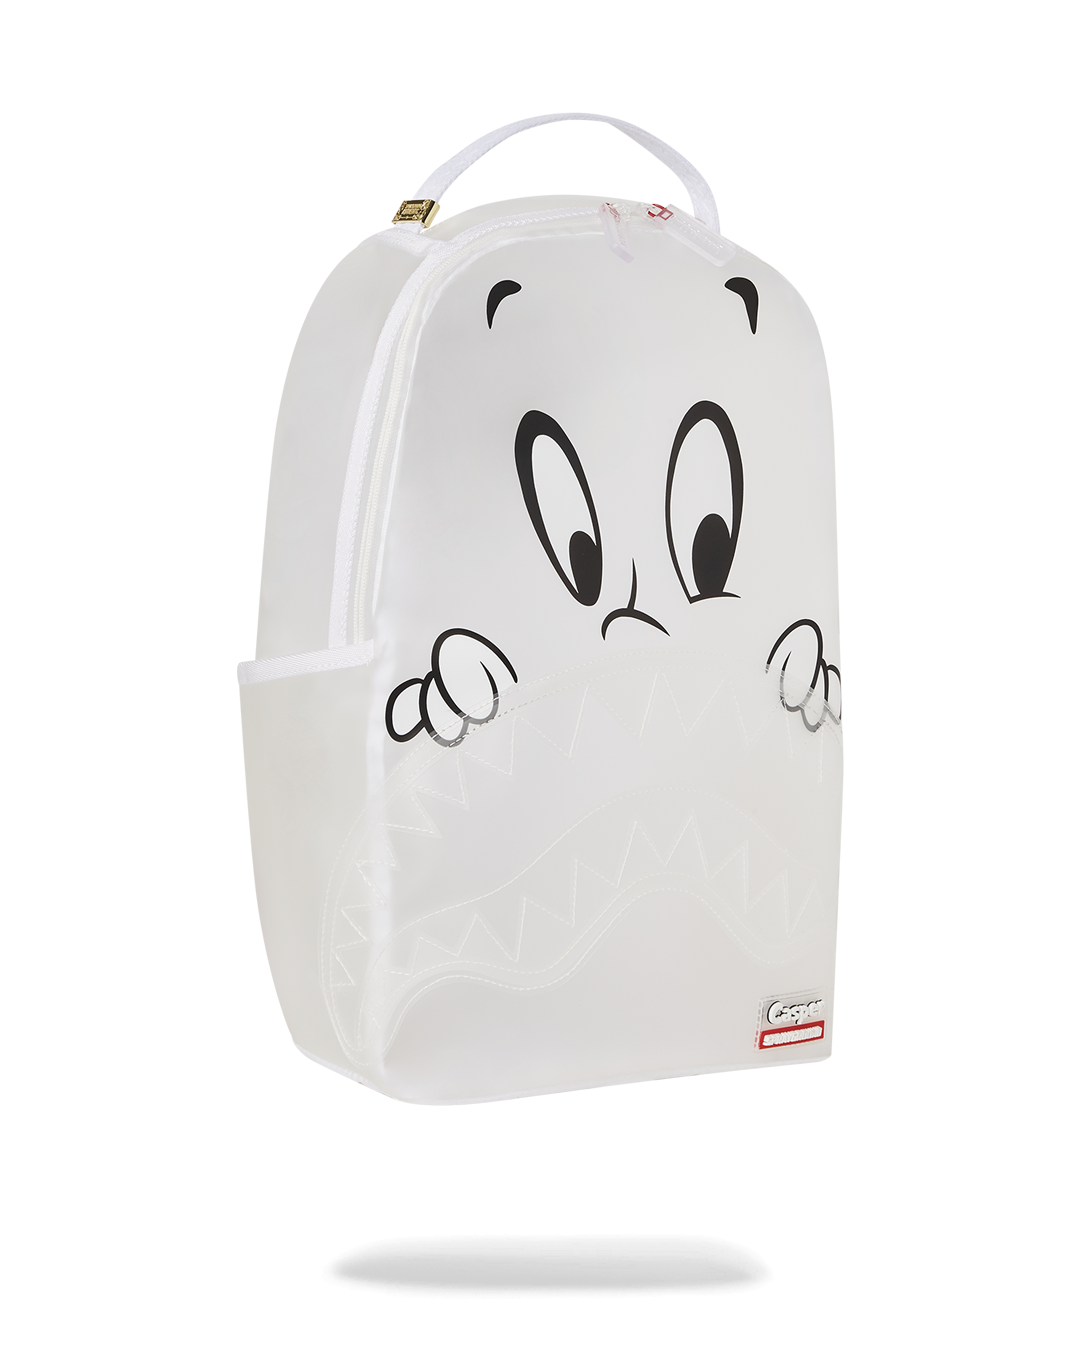 Sprayground x Casper The Friendly Ghost Ghostly Backpack